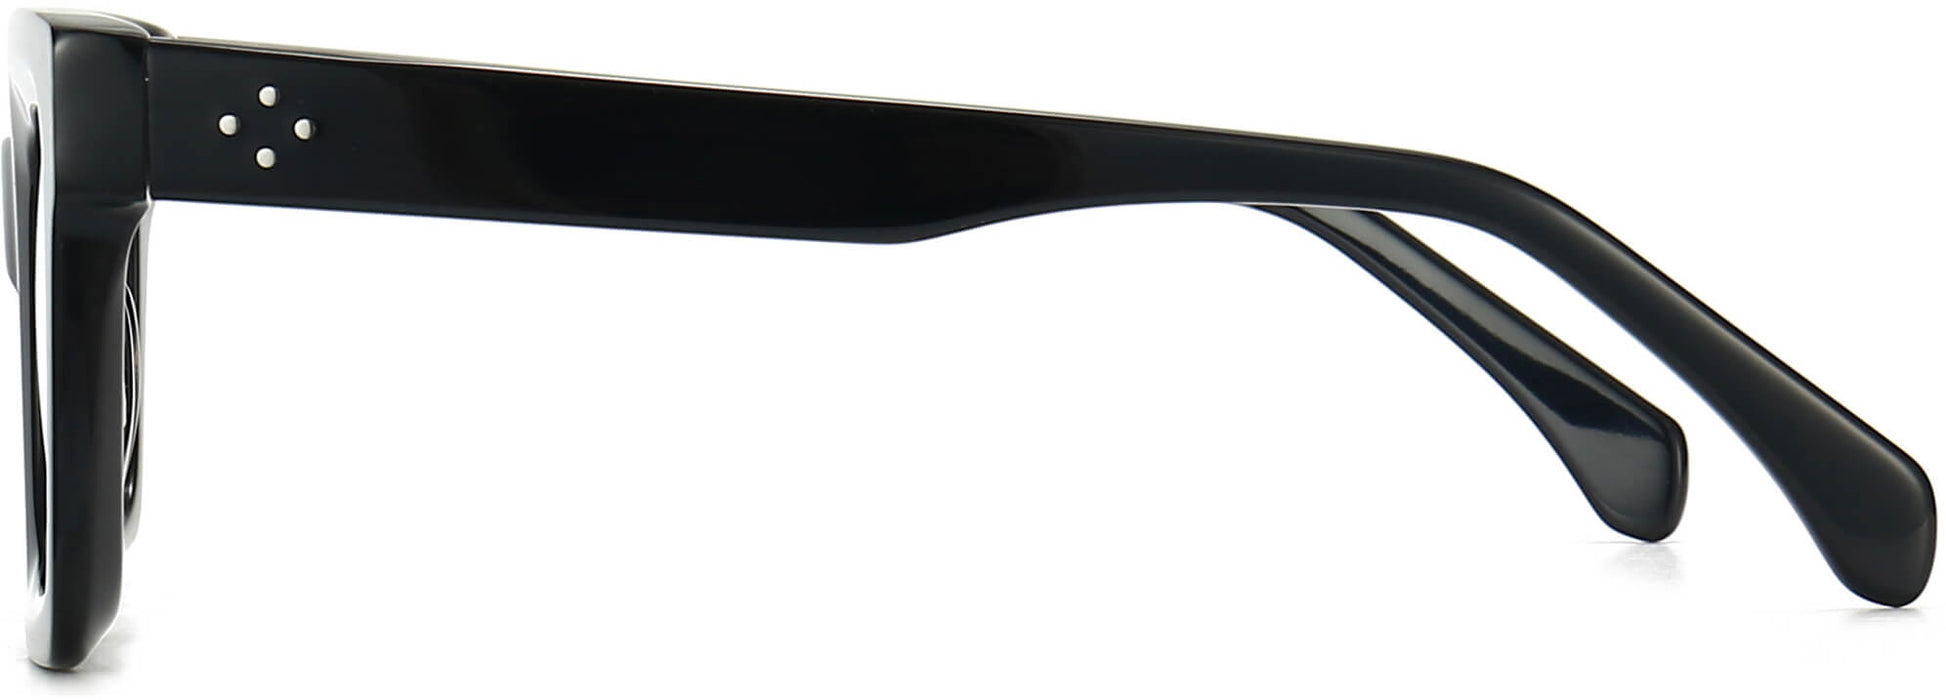 Katalina Square Black Eyeglasses from ANRRI, side view